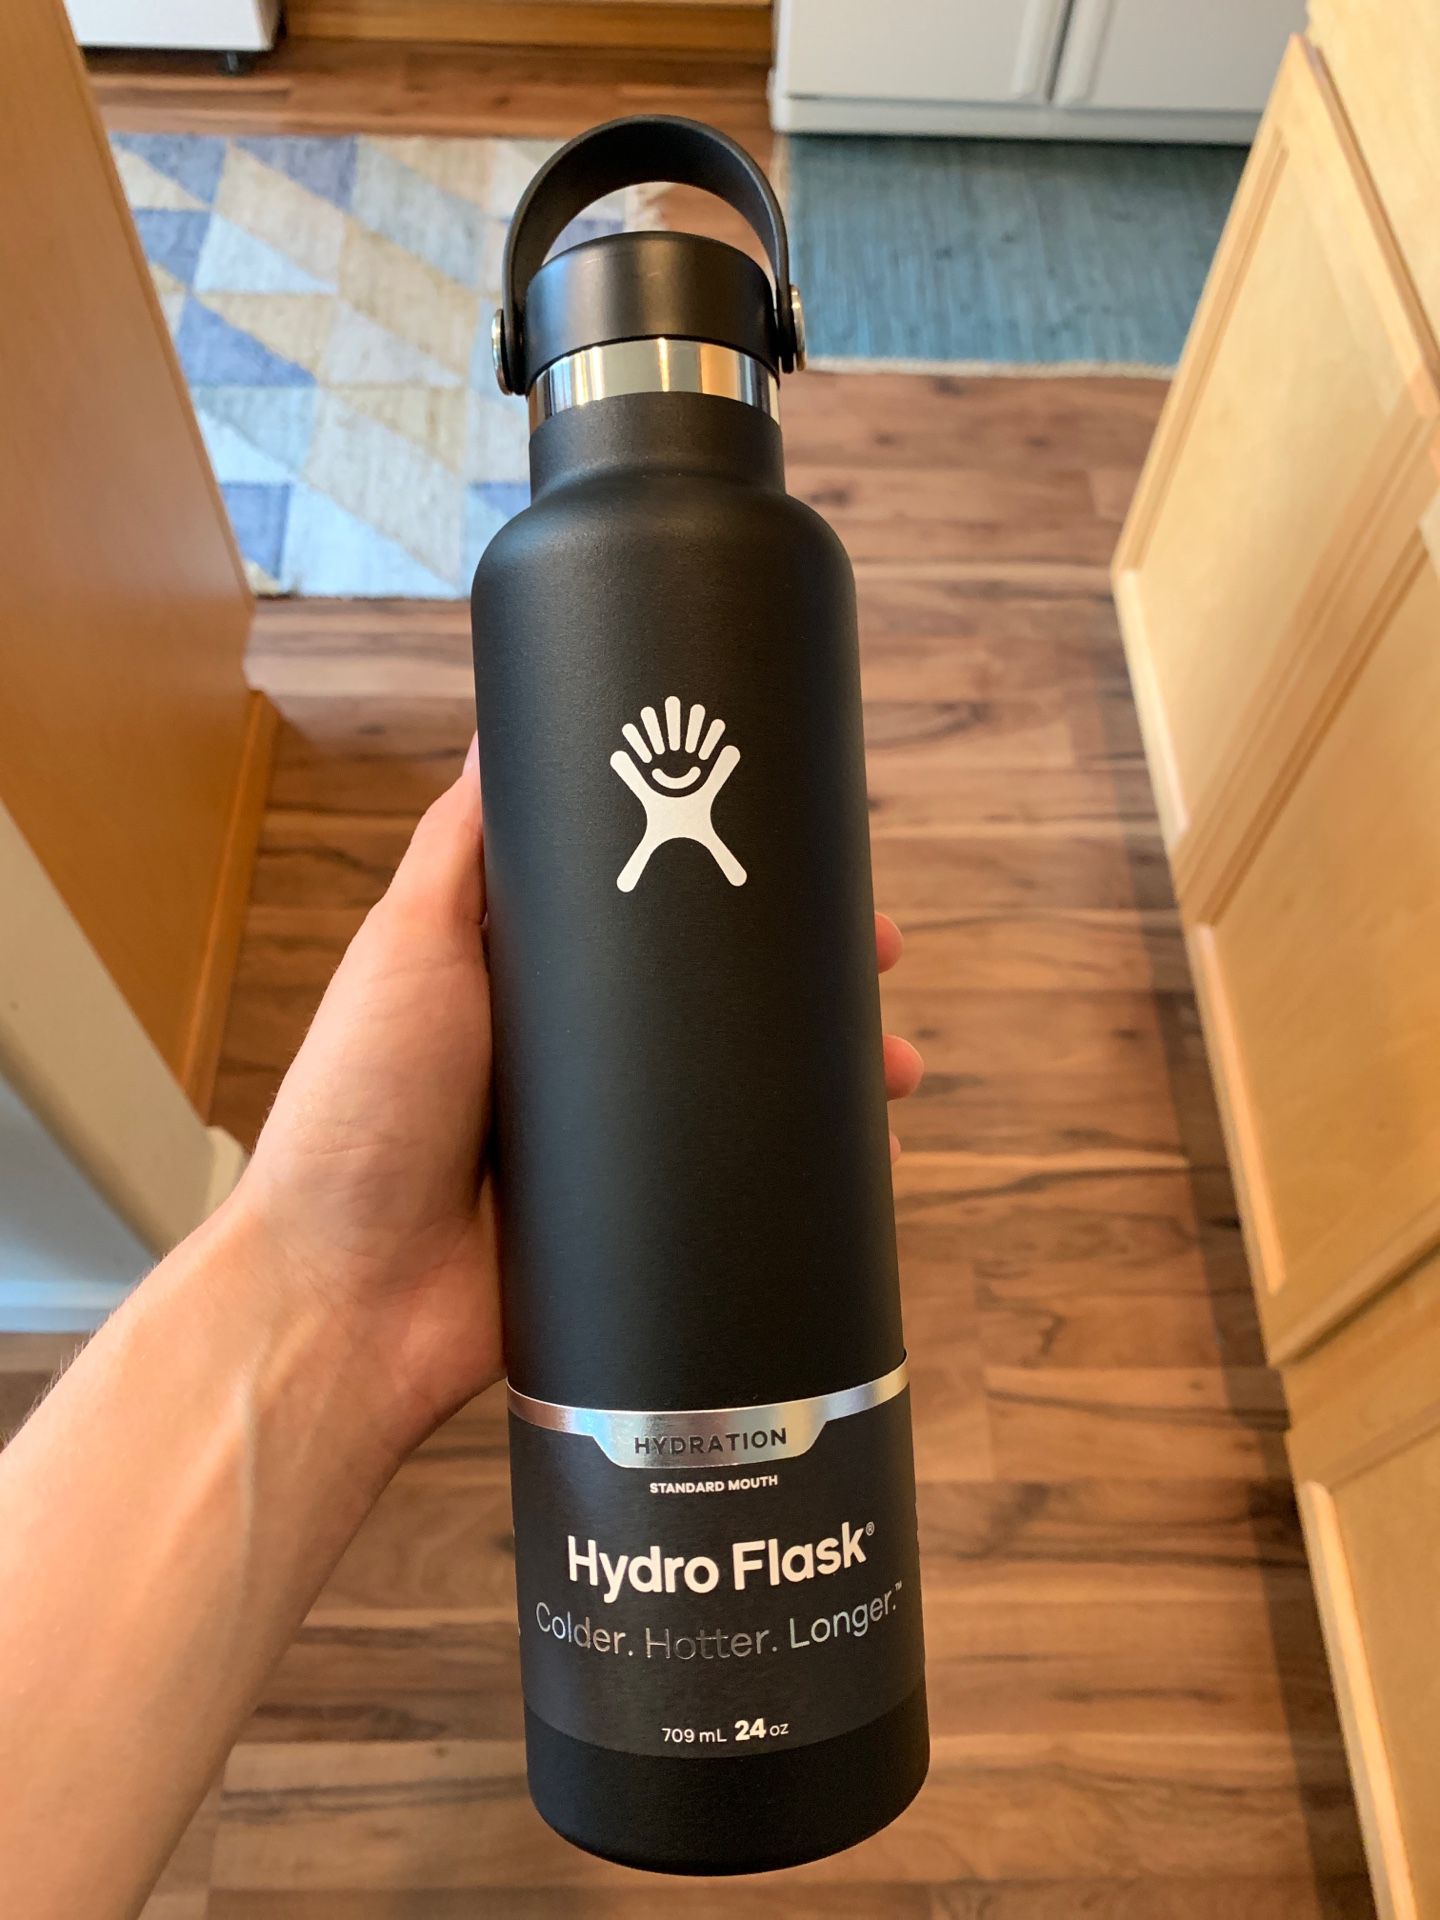 Brand new Hydro flask